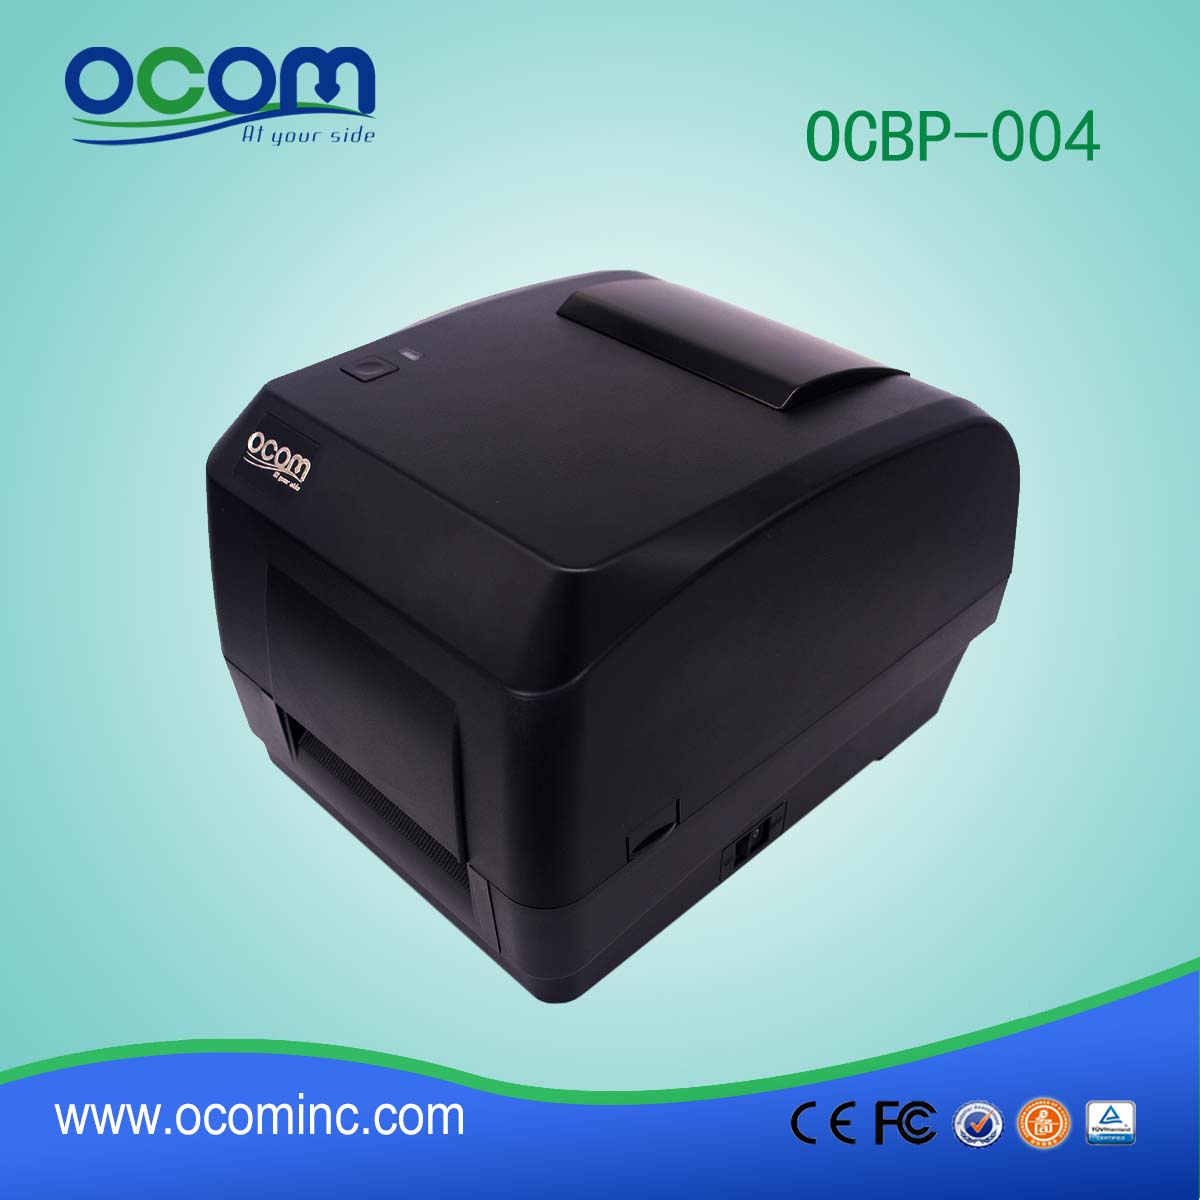 OCBP-004B-L 300DPI Transferência térmica e impressora de etiquetas de código de barra térmica direta